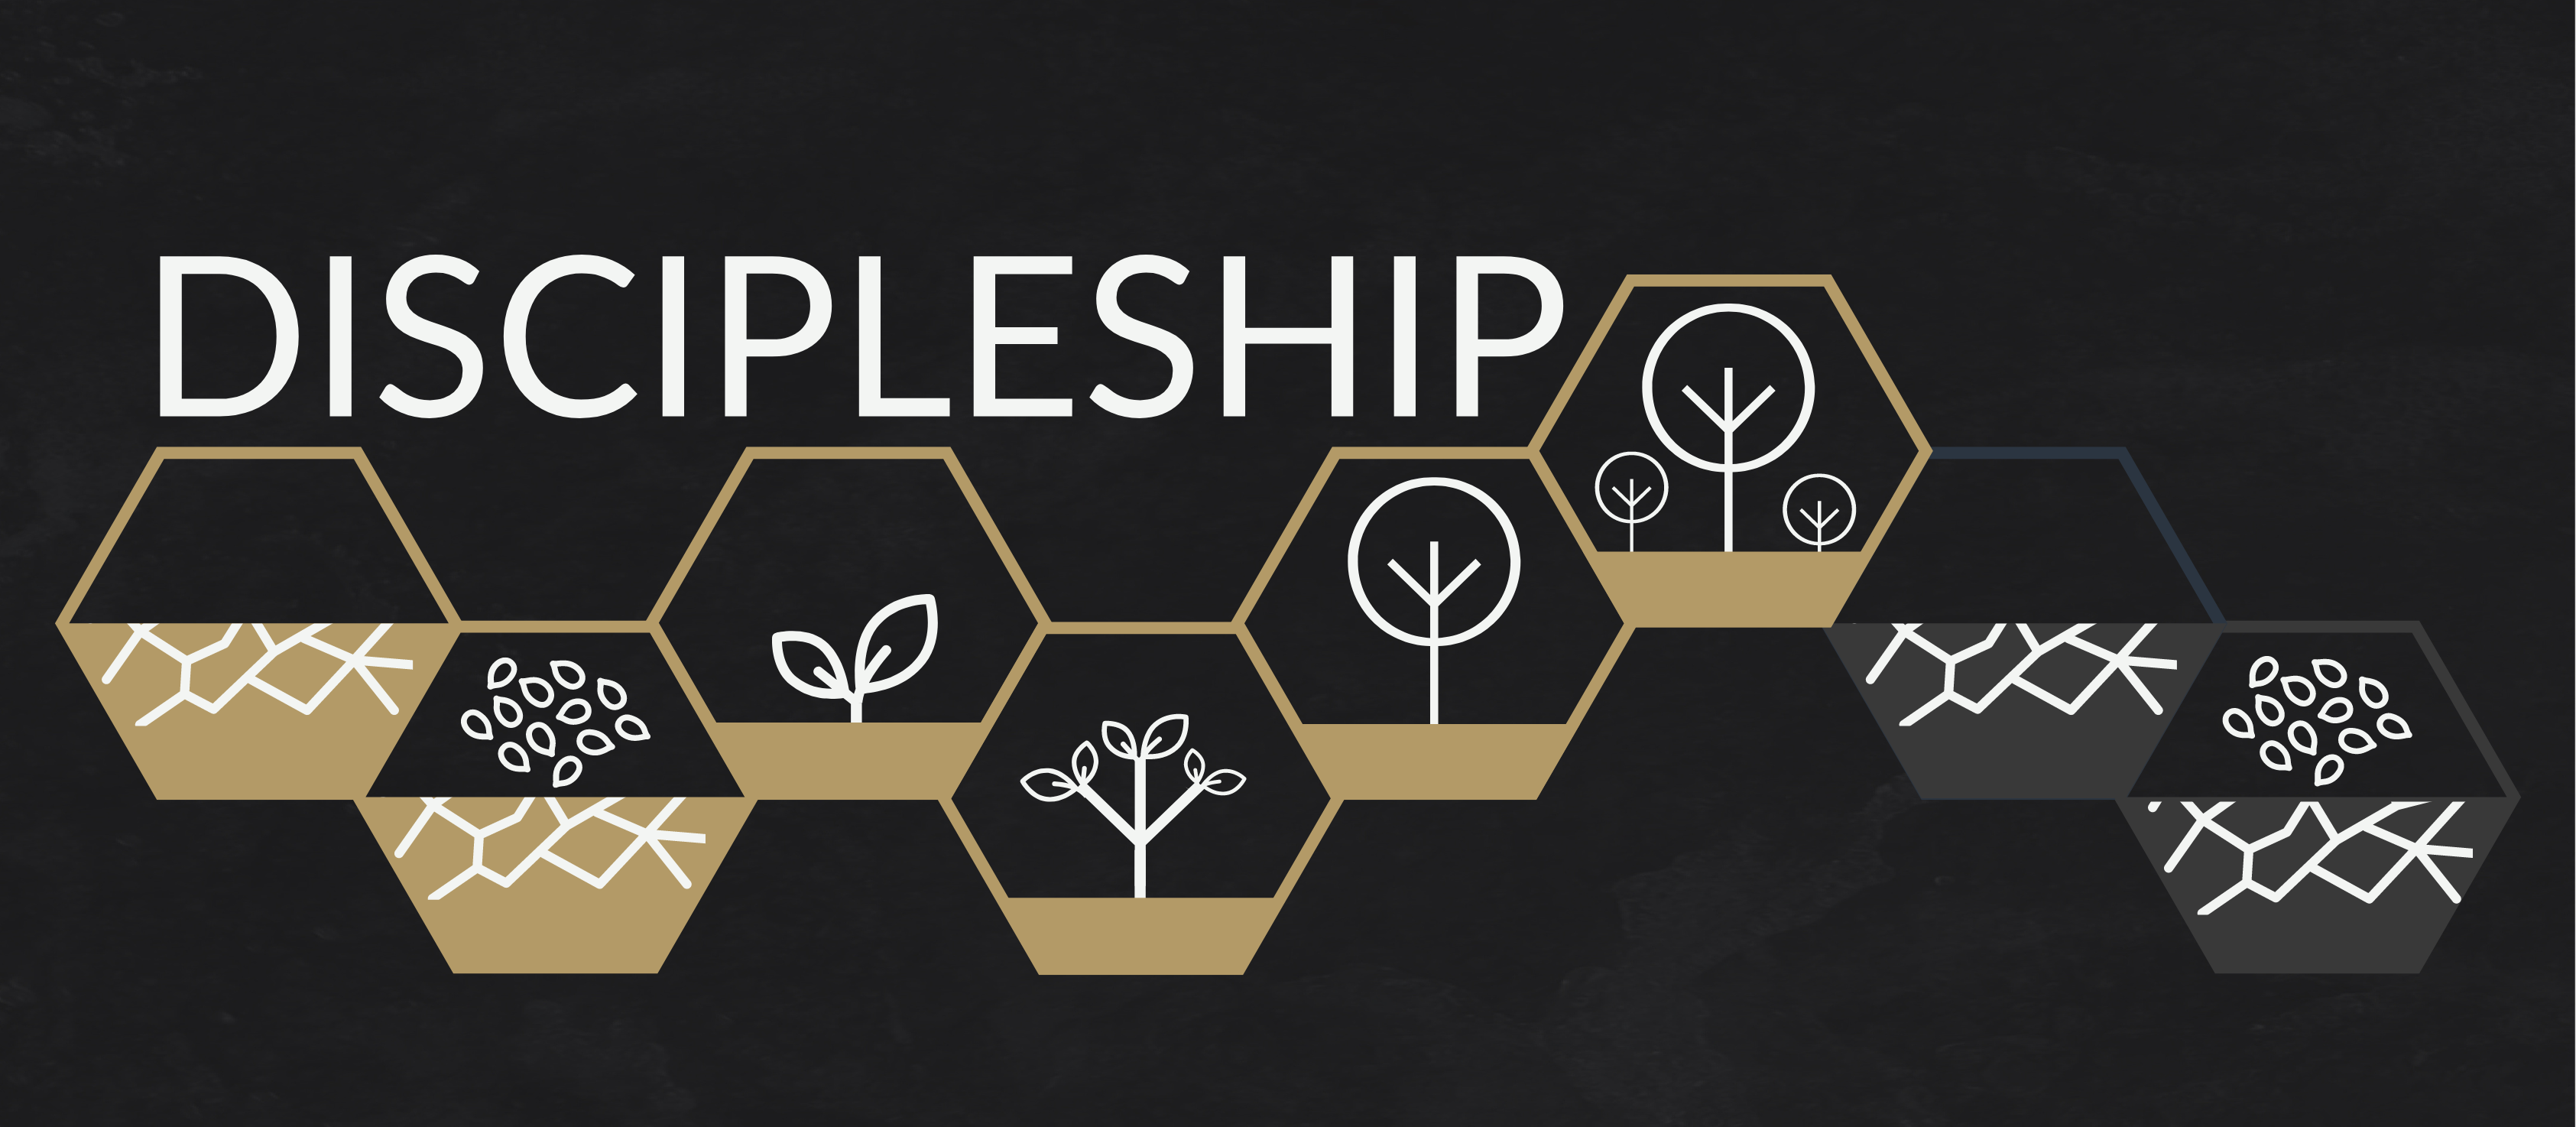 The Aim of Discipleship